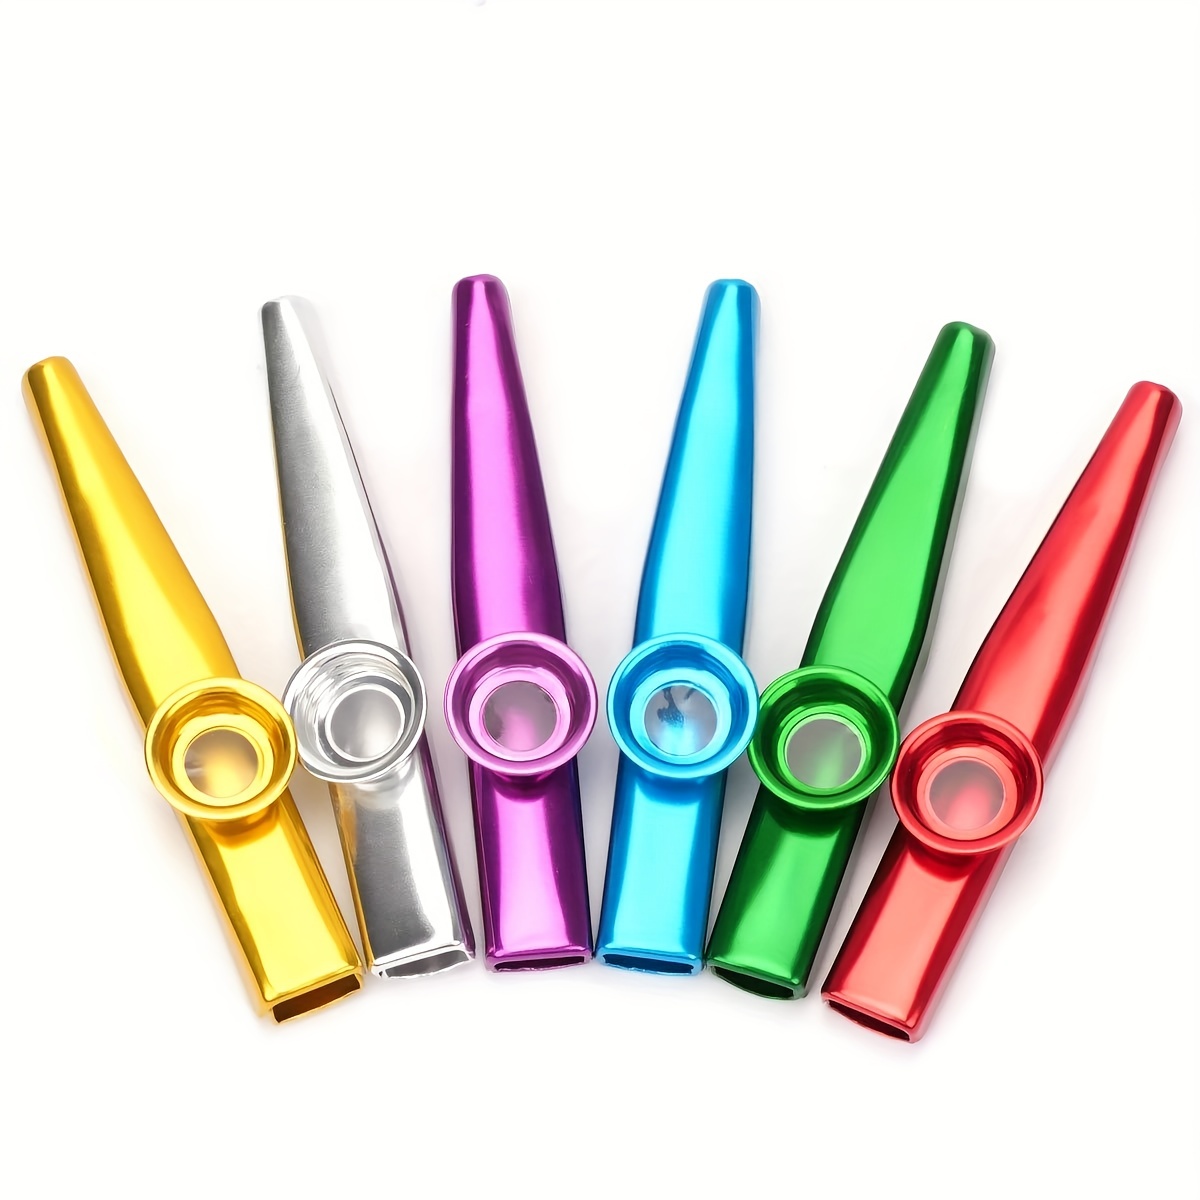 1pc Kazoos Colorful Plastic Kazoo Musical Instruments Kazoo With